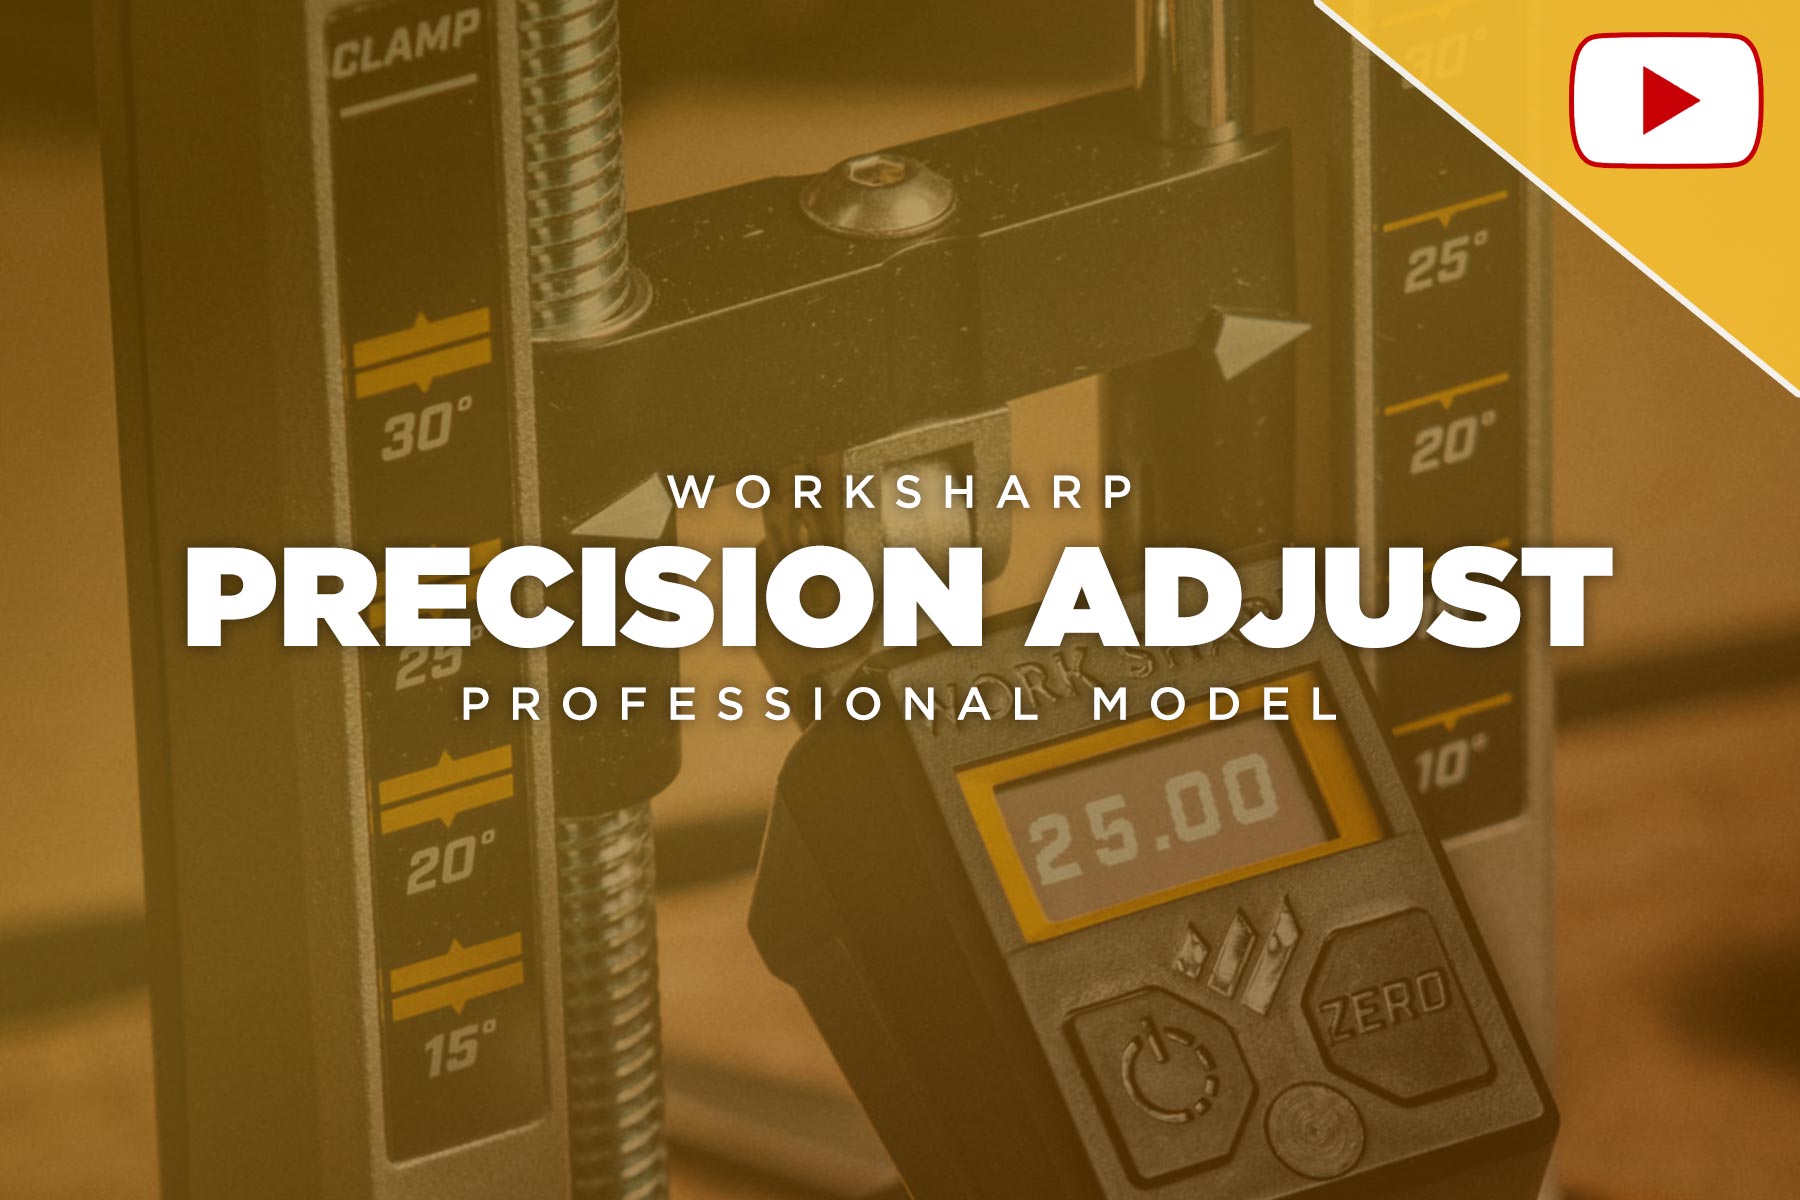 Work Sharp Precision Adjust Review/Comparison - Elite & Regular!